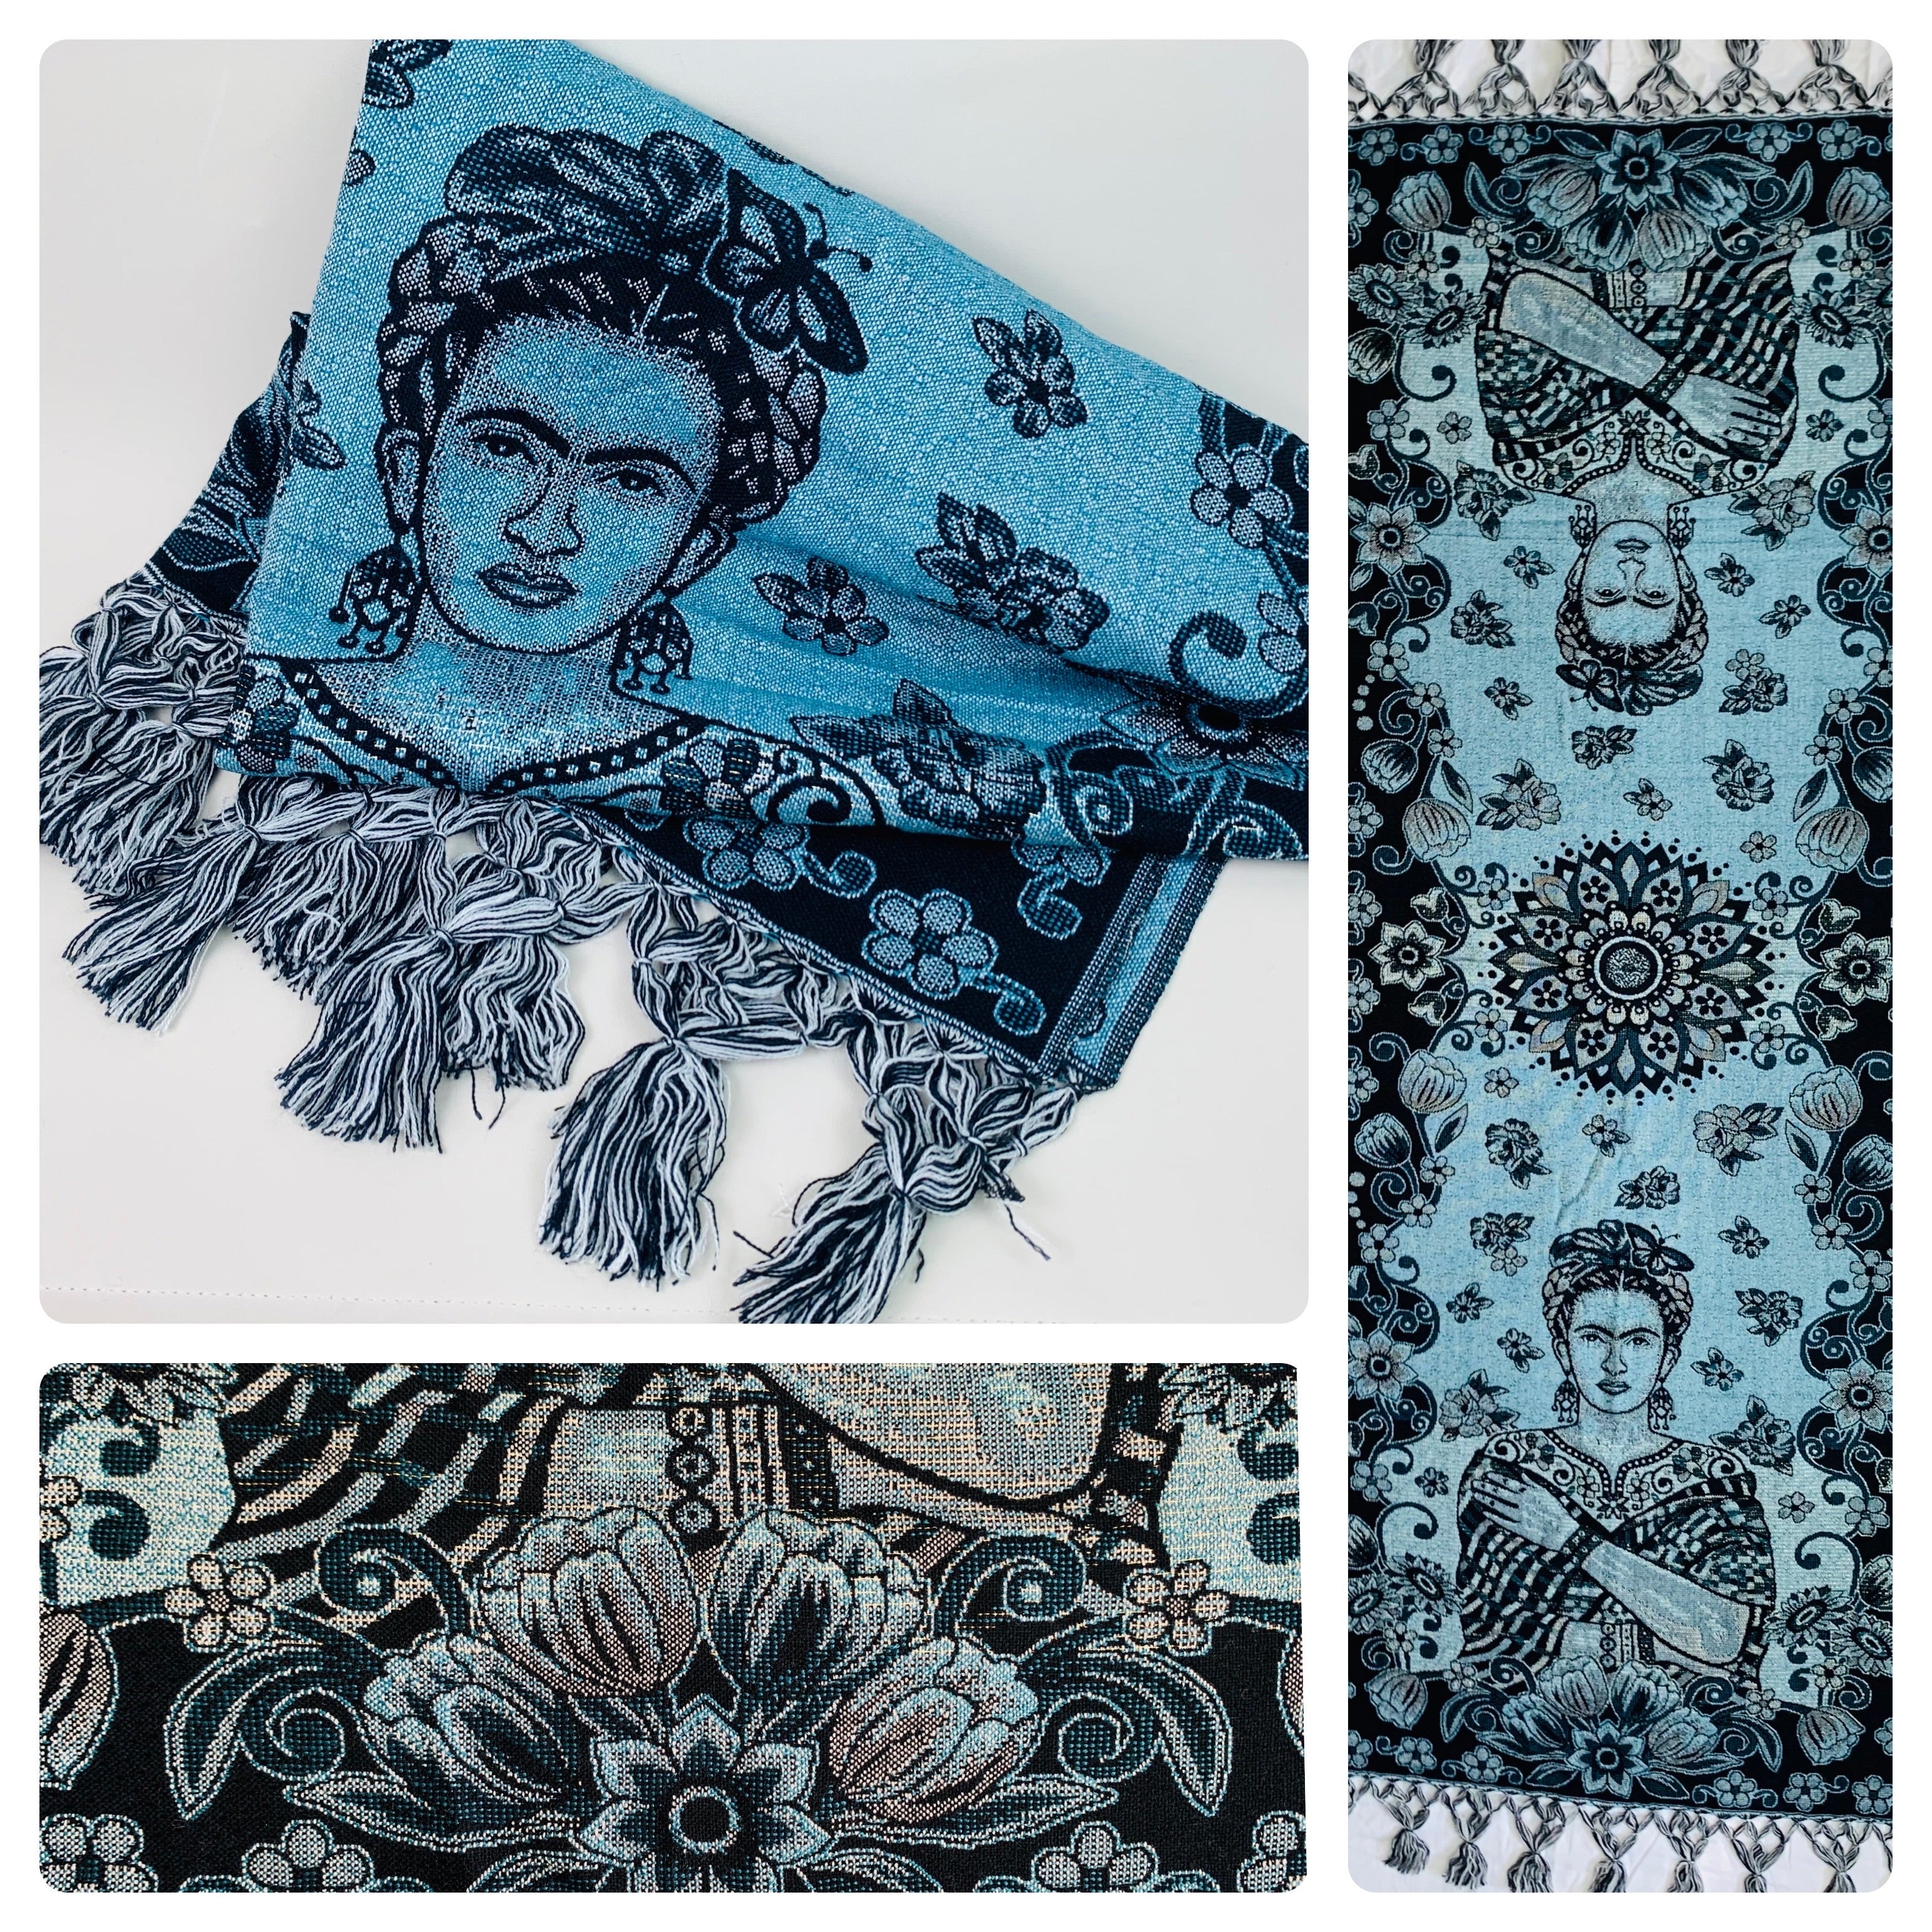 Frida/Maria Mexikanischer Mode-Rebozo-Schal (200 cm x 72 cm)